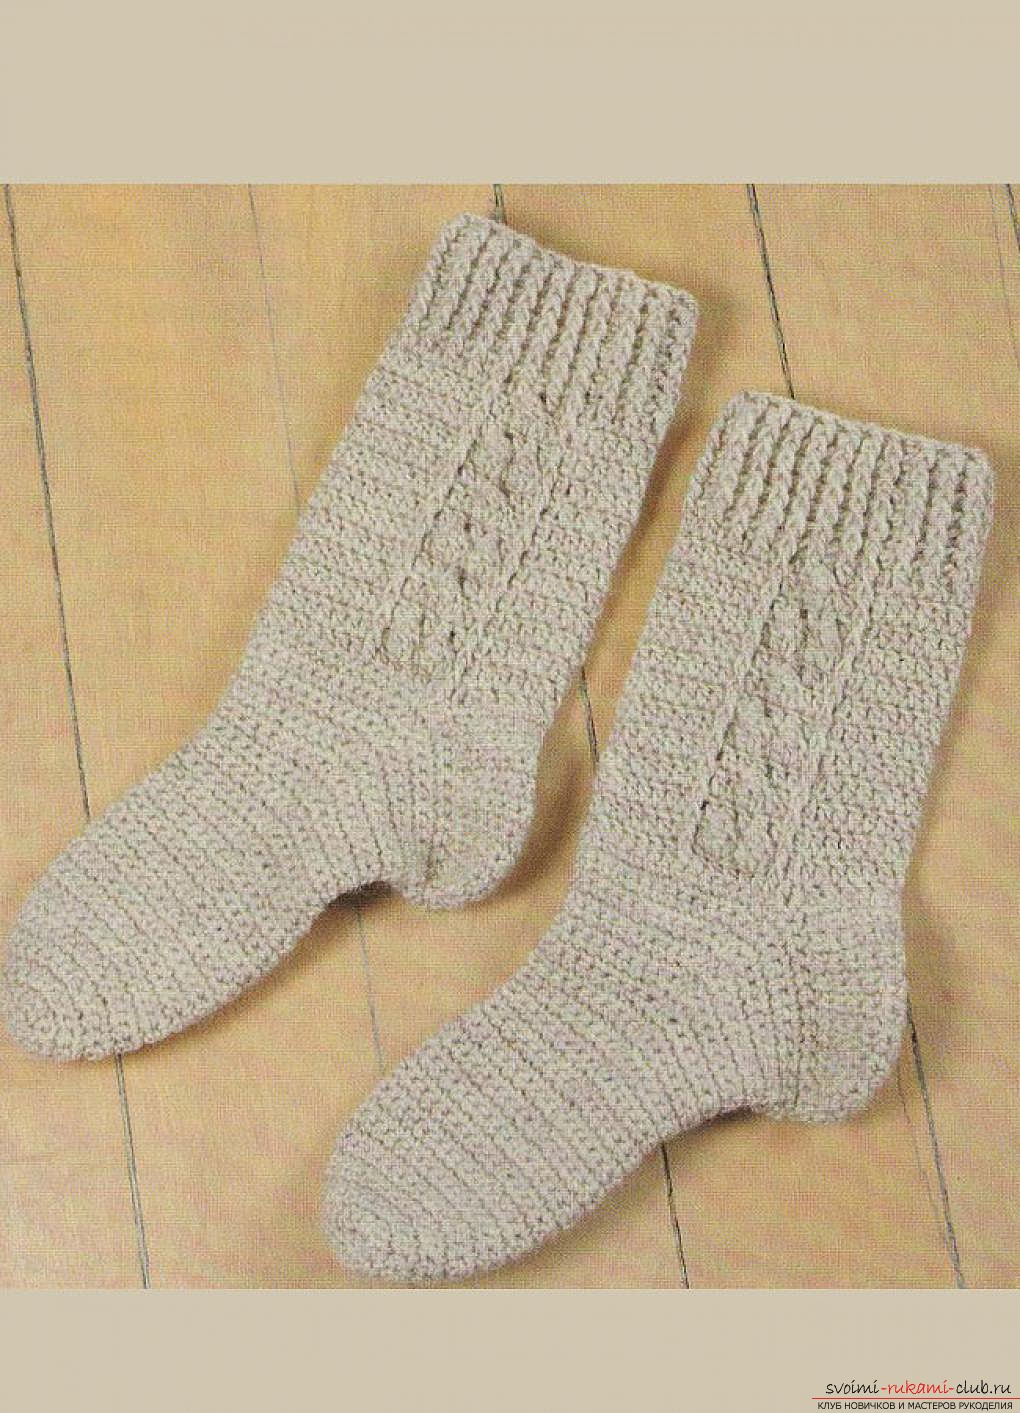 crocheted charming socks. Photo №1